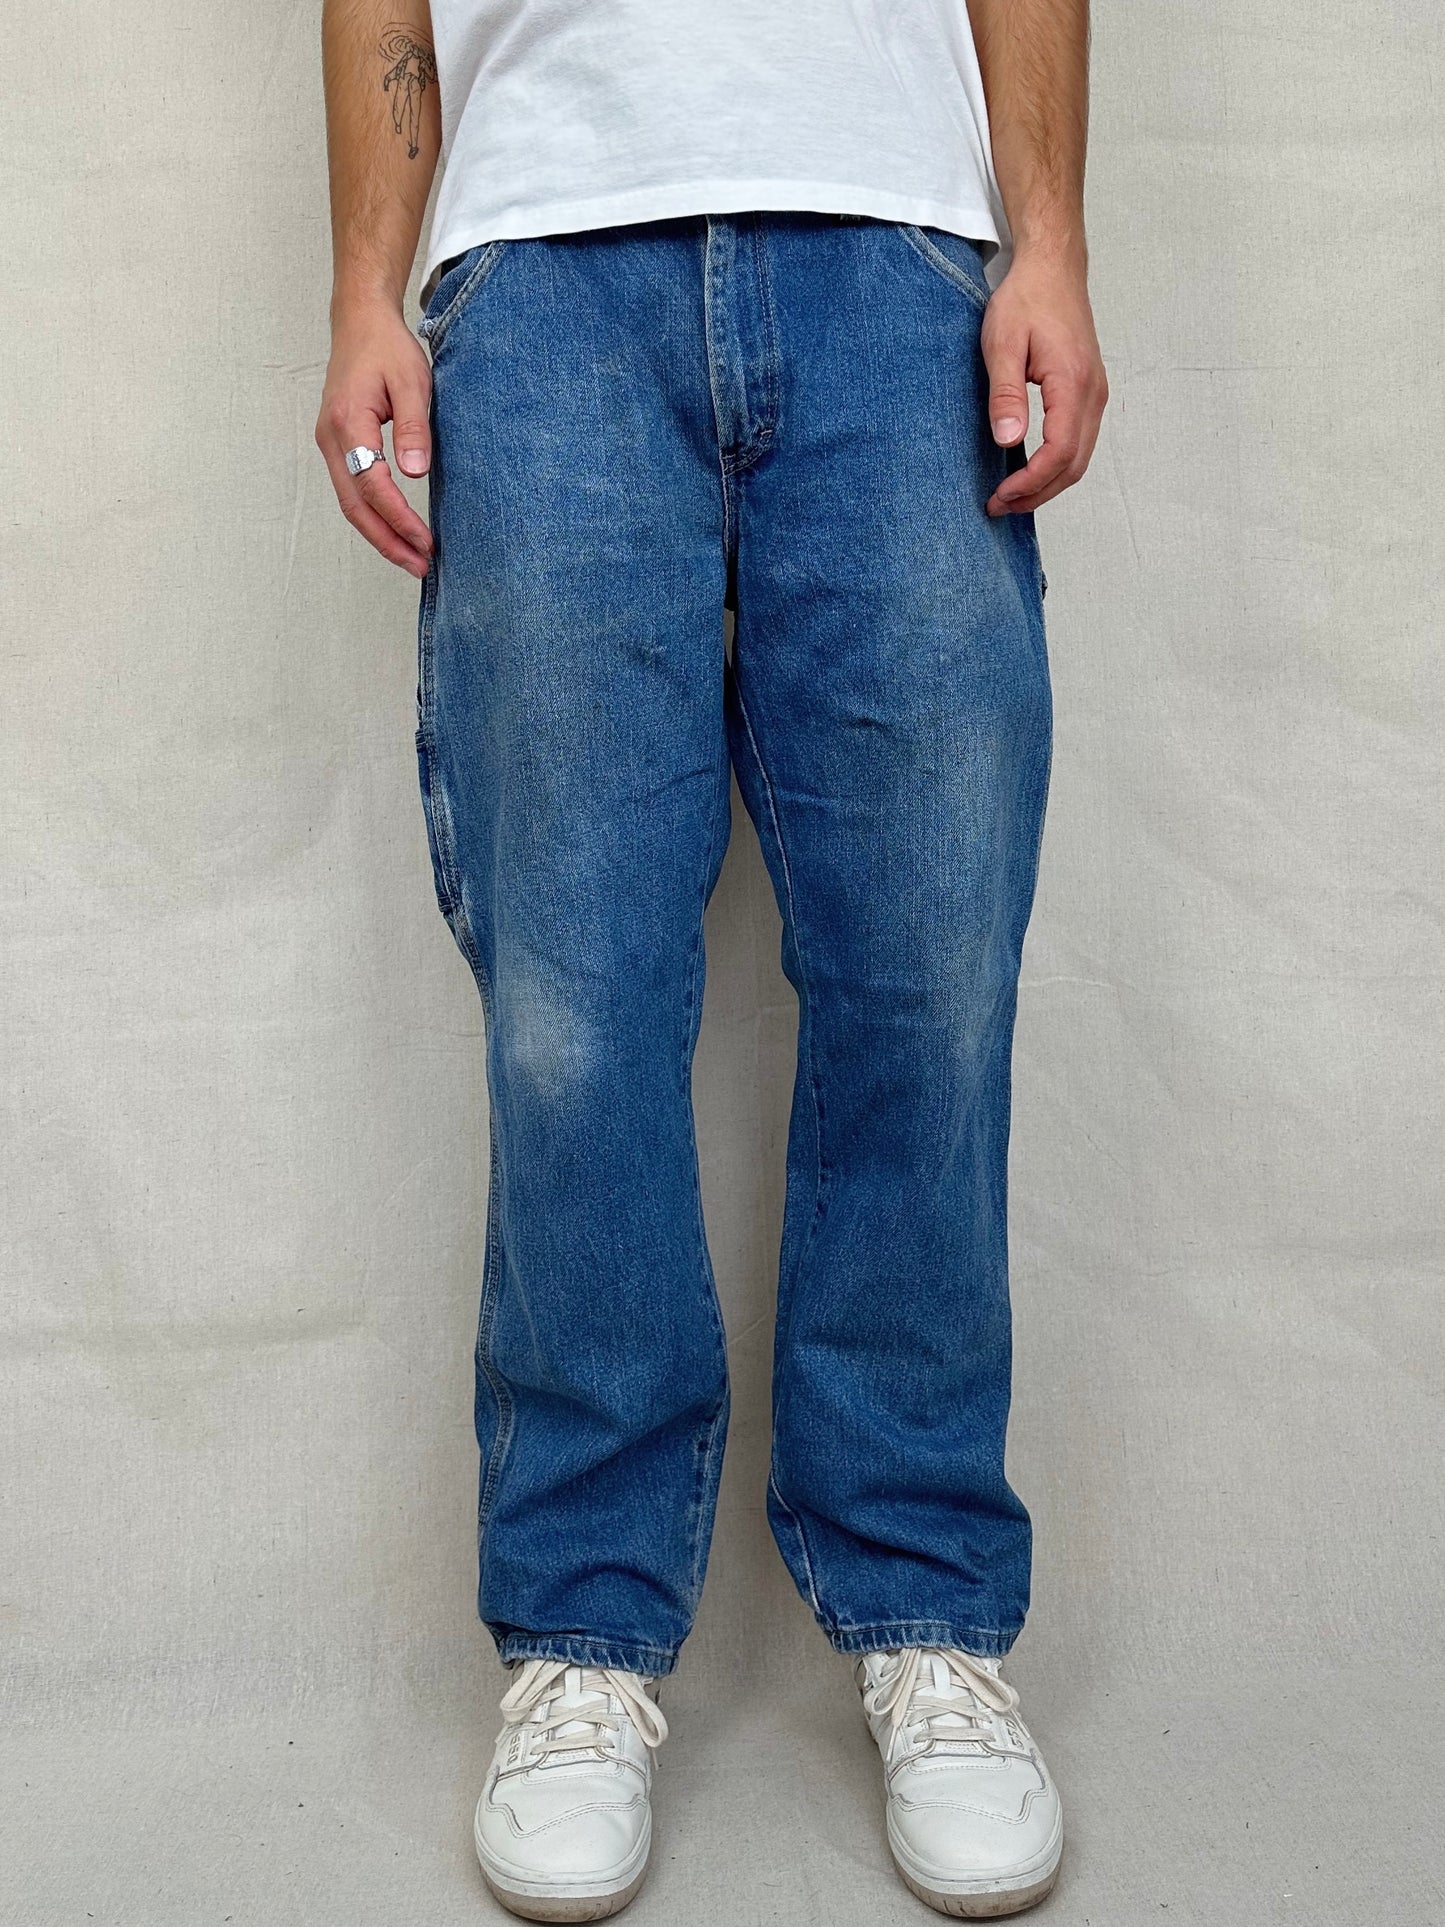 90's Dickies Vintage Carpenter Jeans Size 34x31